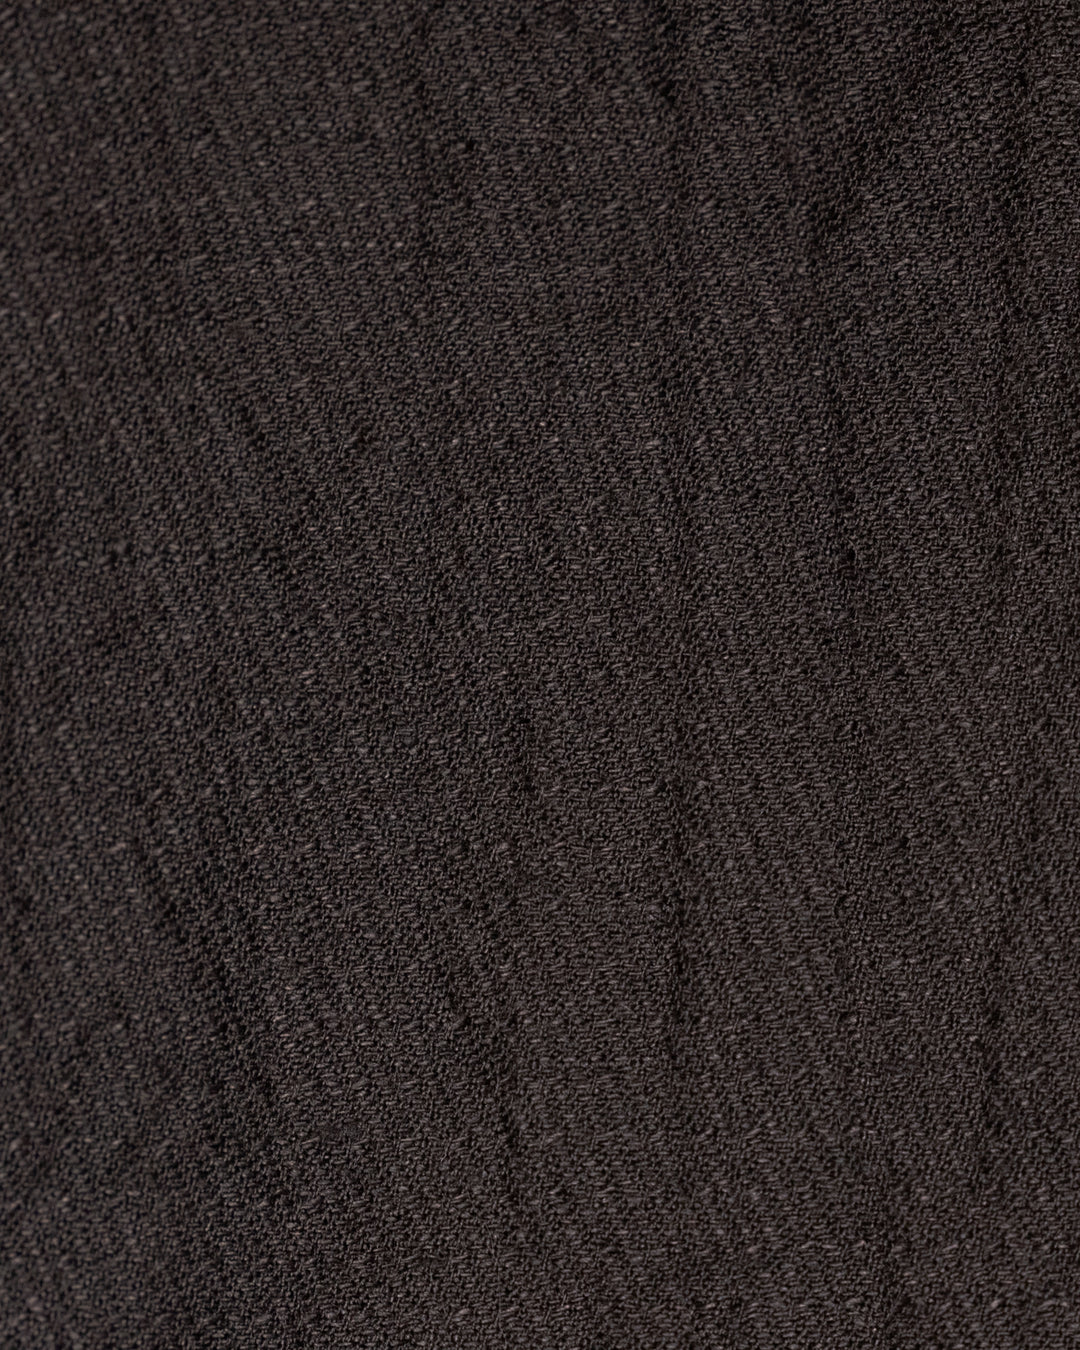 Fabric Swatch (60% Linen, 40% Wool)